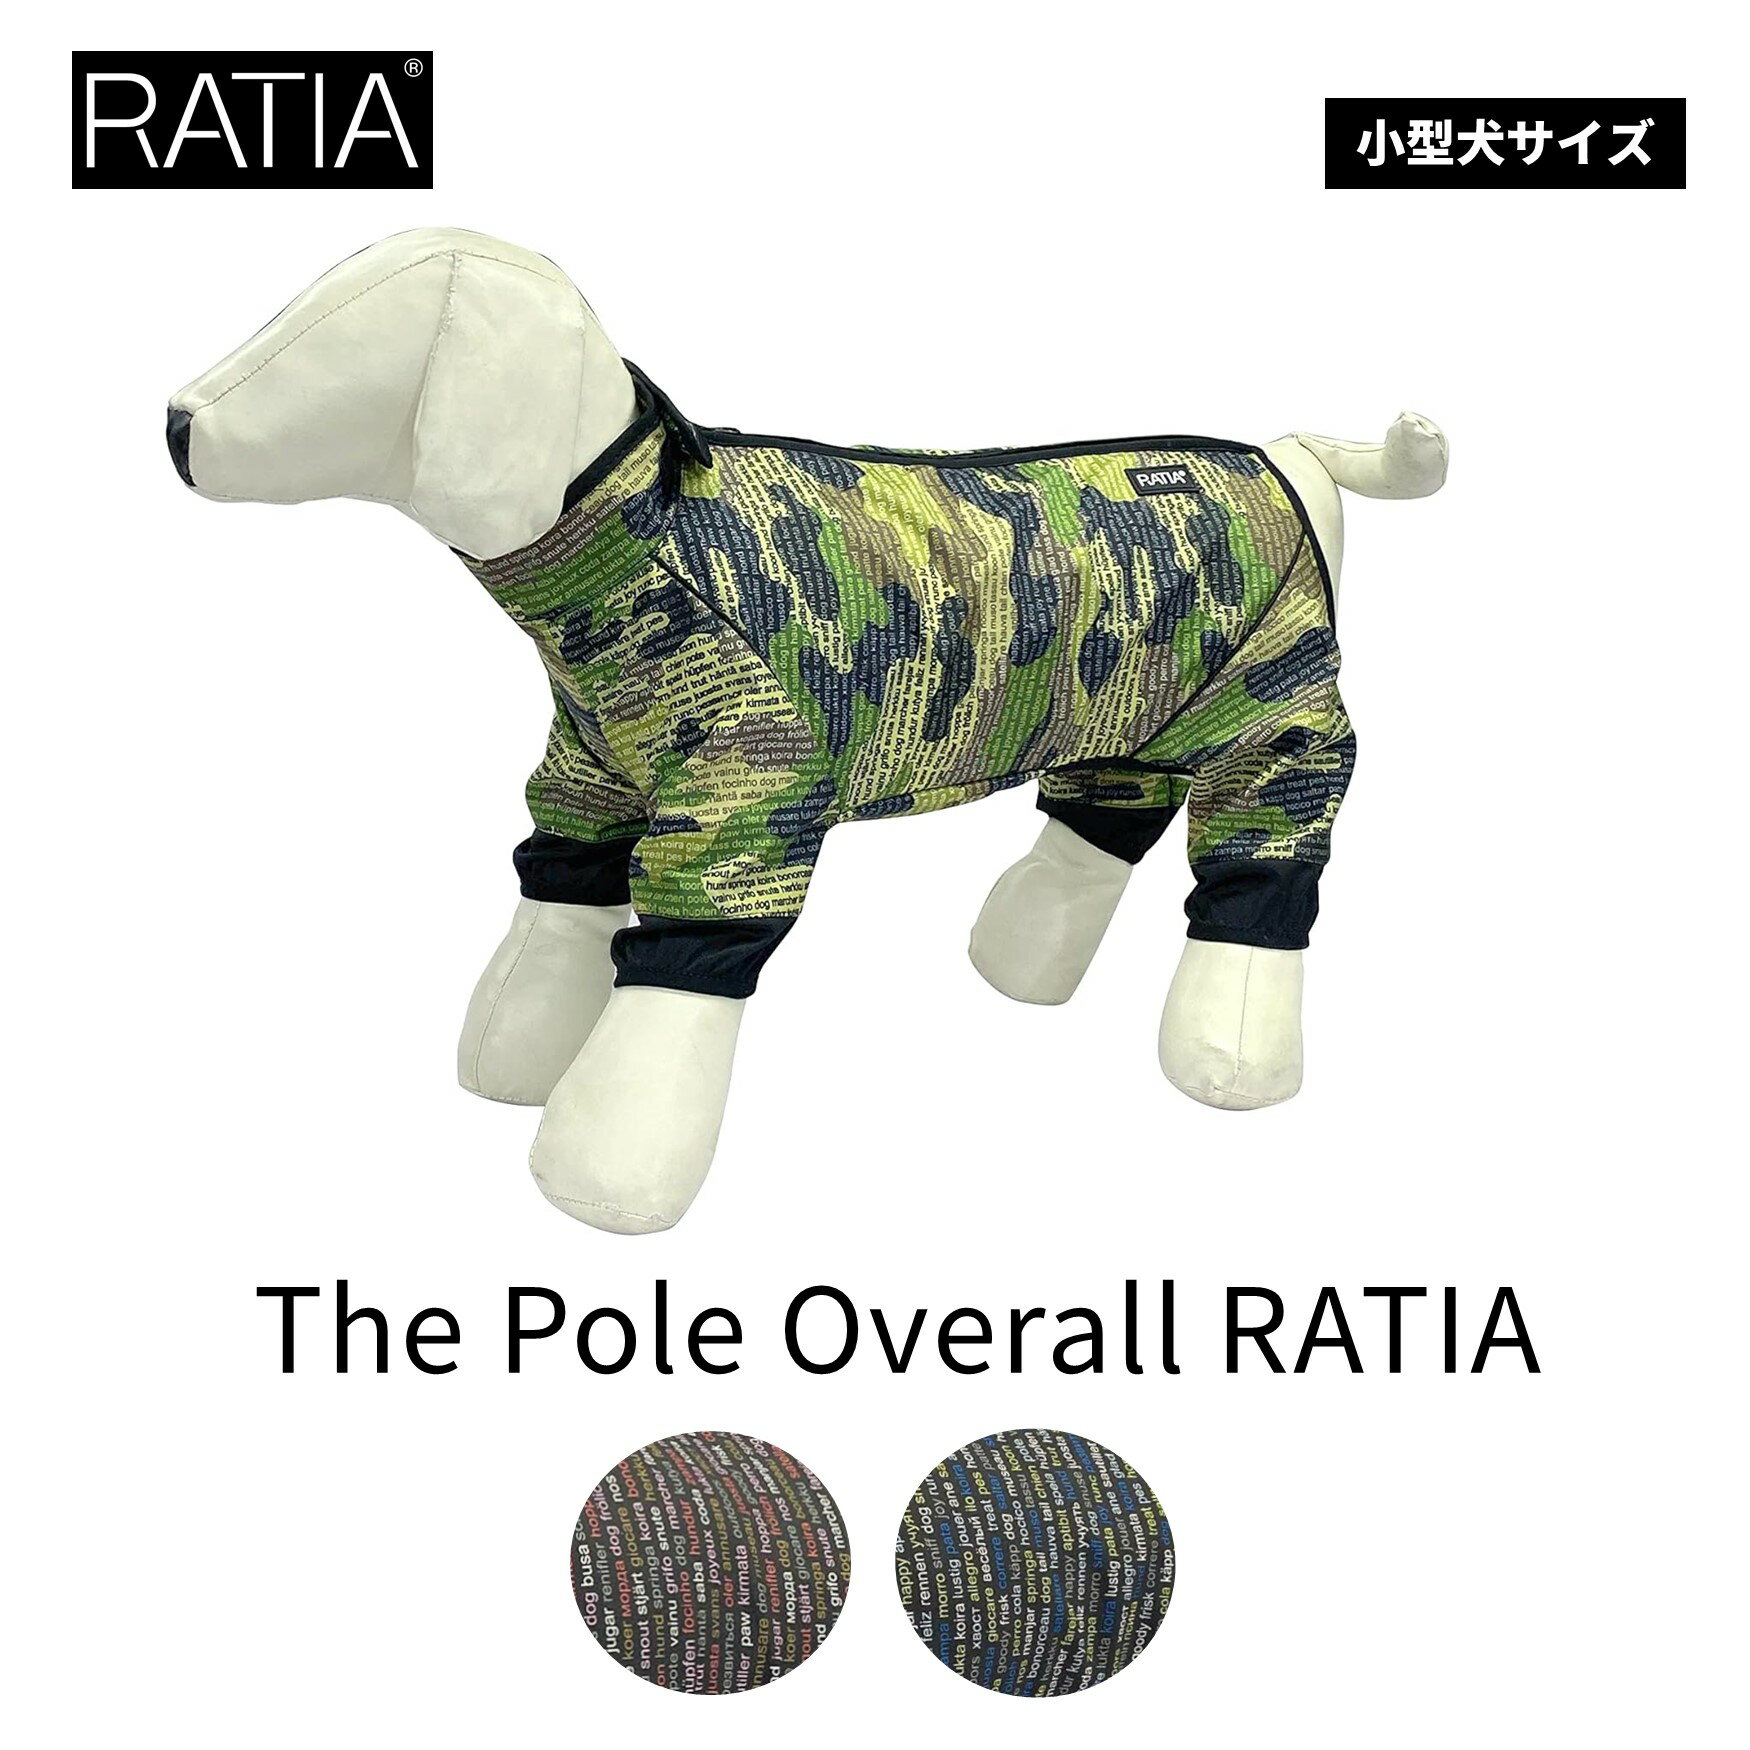 [Ratia/Finland]₷Ē₷I[o[I[yThe Pole Overall Ratiaz^pTCY